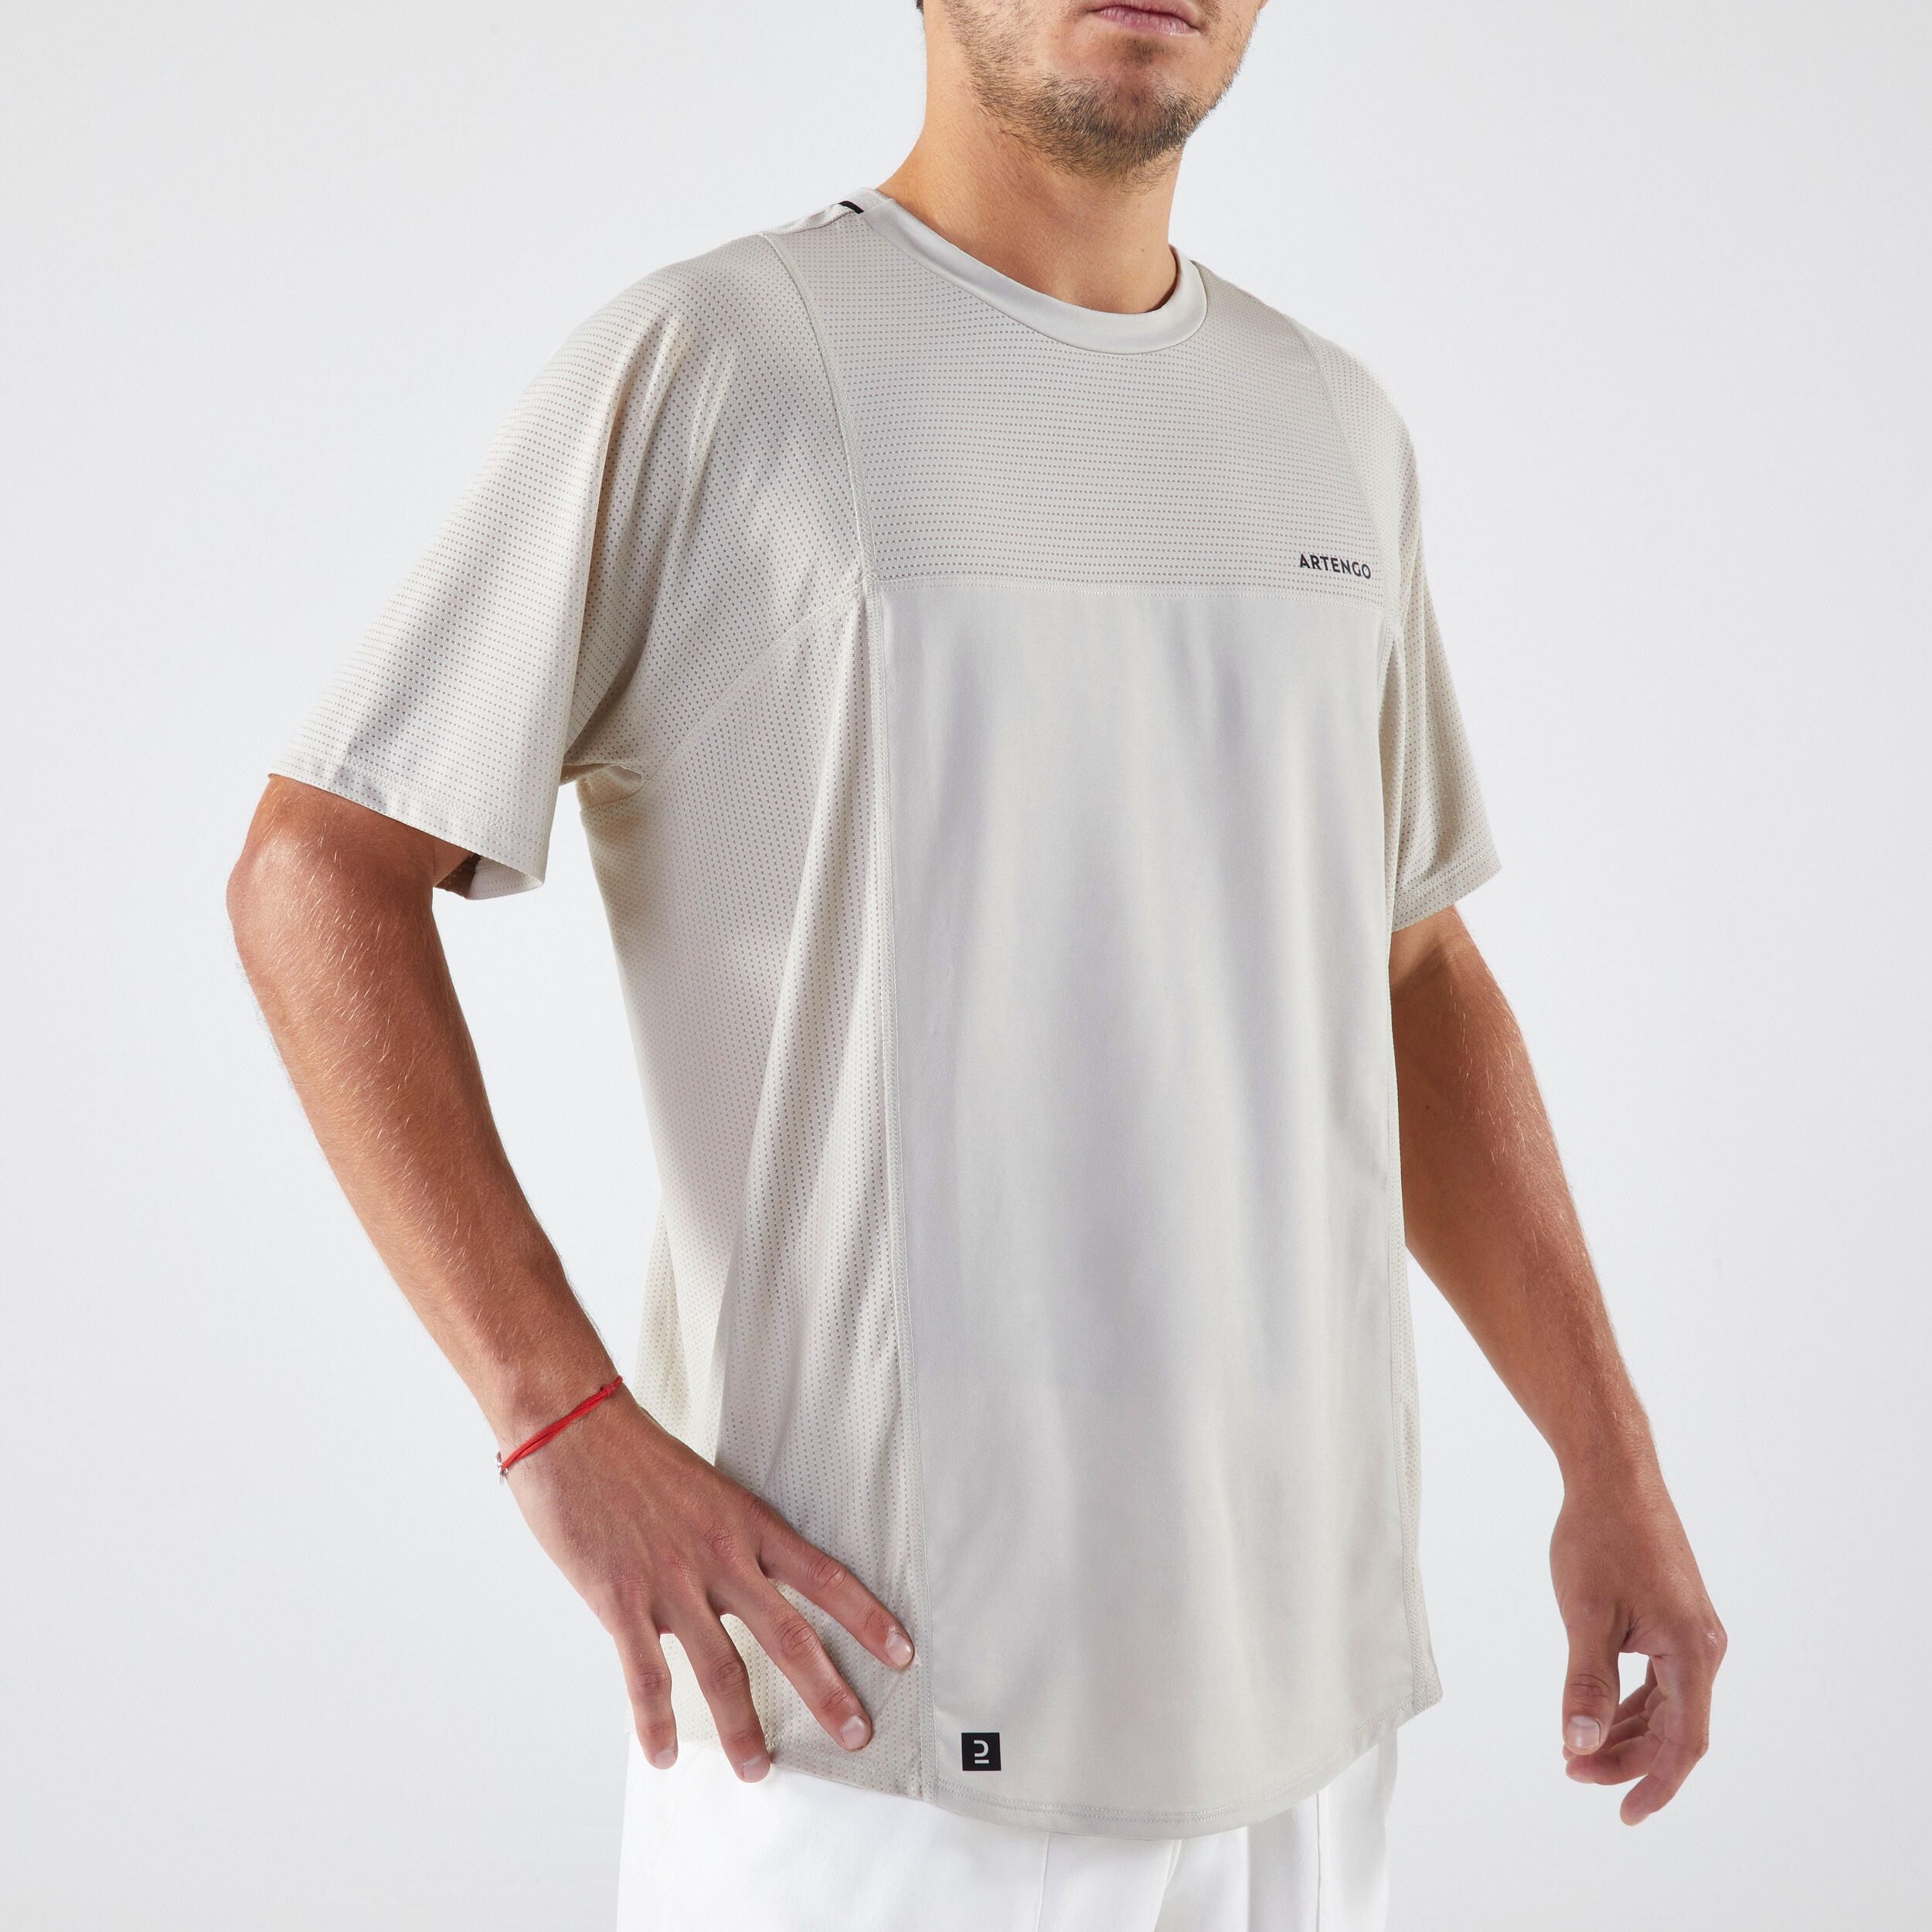 Men's Short-Sleeved Tennis T-Shirt Dry Gaël Monfils - Beige 5/6